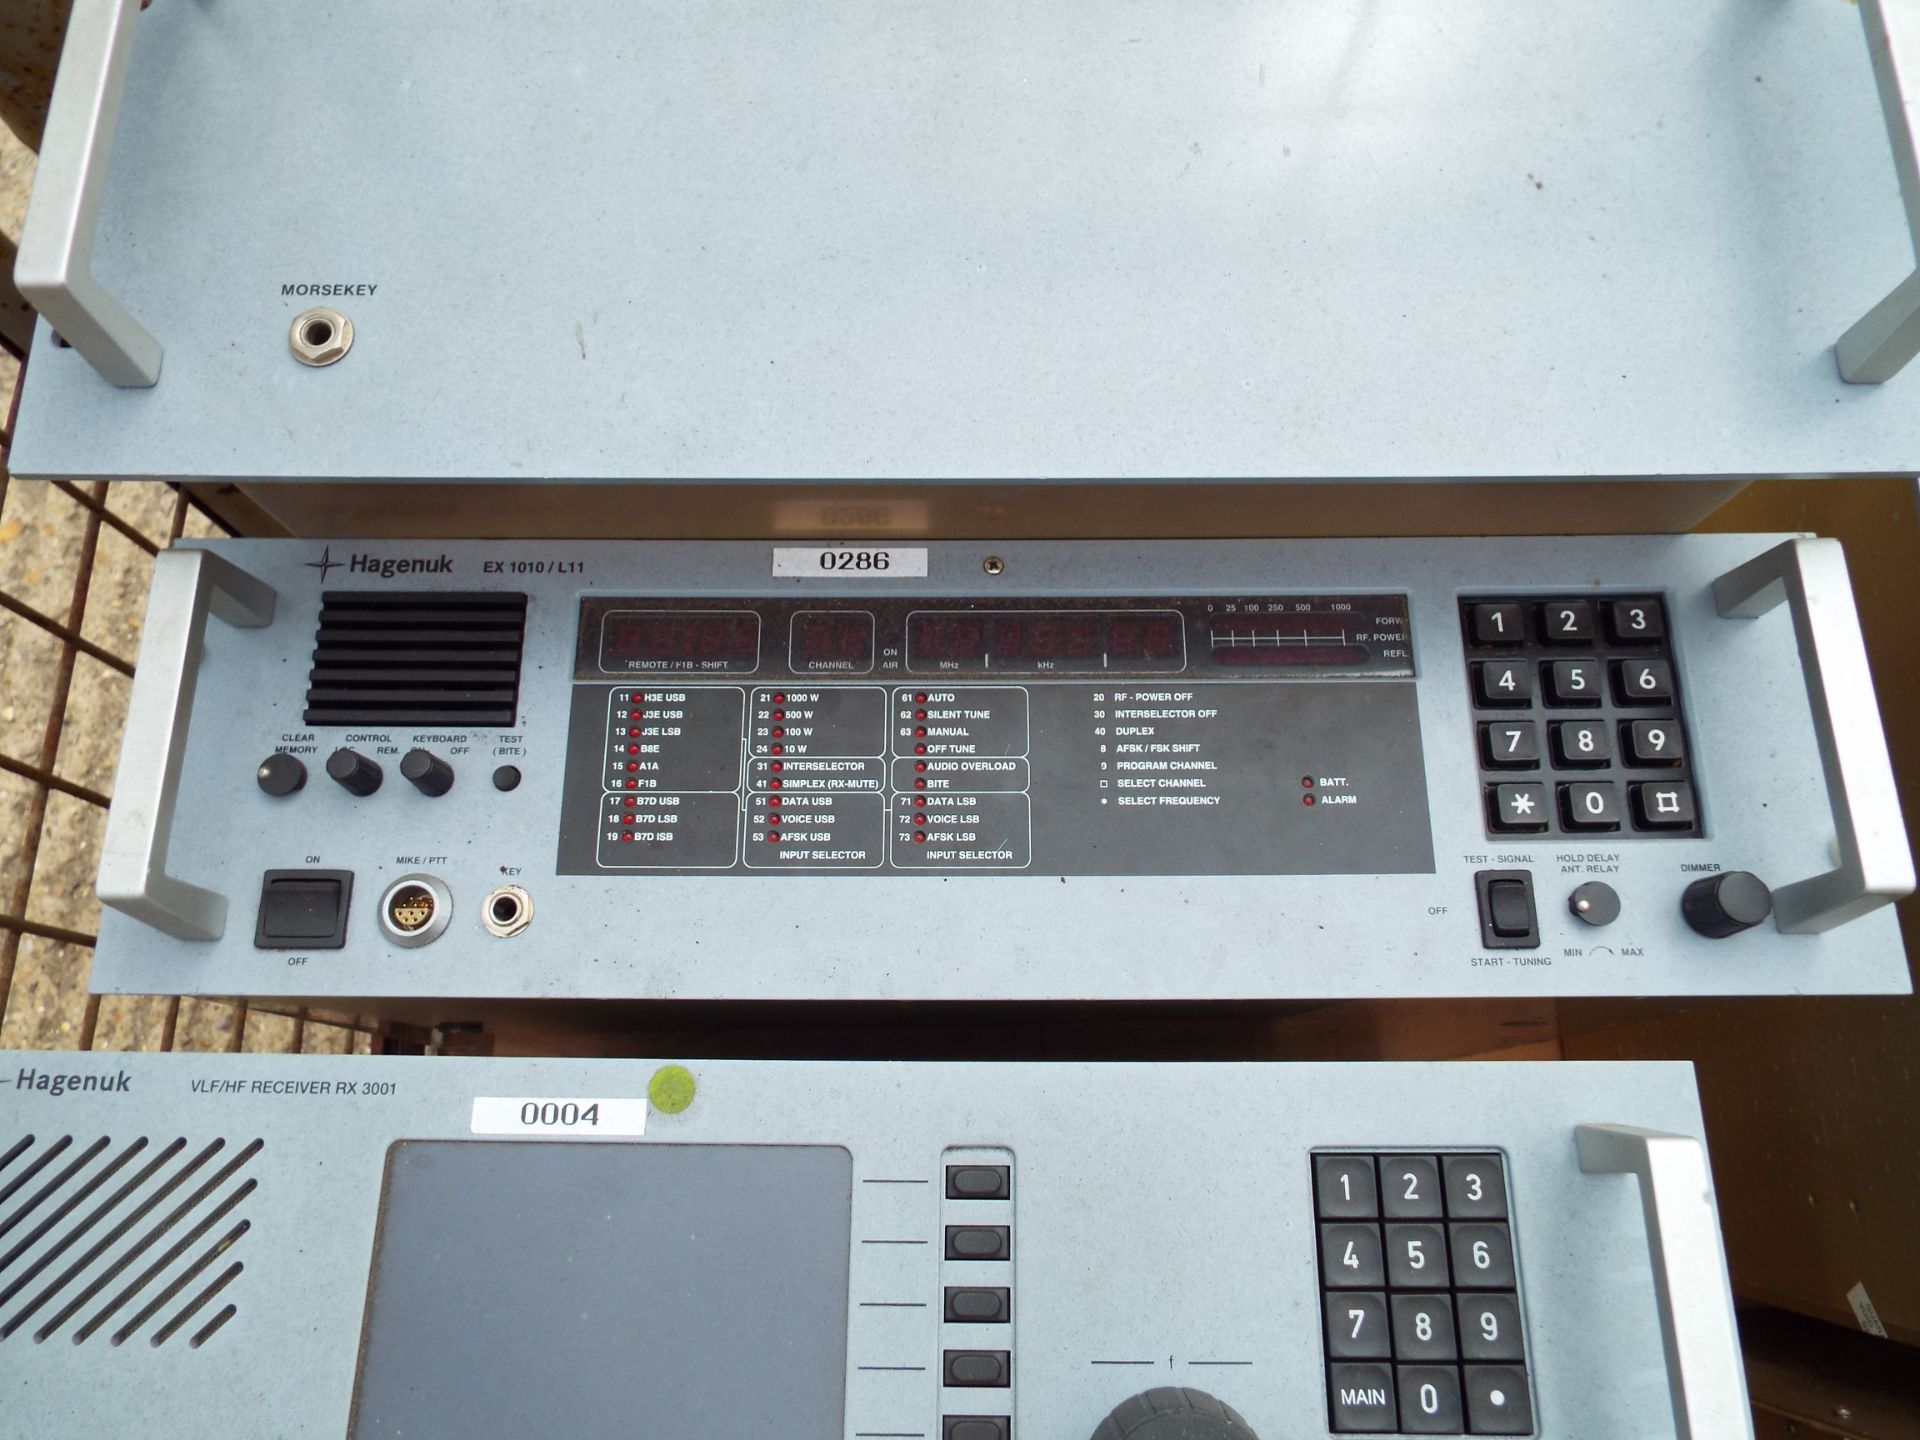 Mixed Stillage of Hagenuk Radio Equipment consisting of ICU, Transmitter, Receiver, Amplifier etc - Image 3 of 10